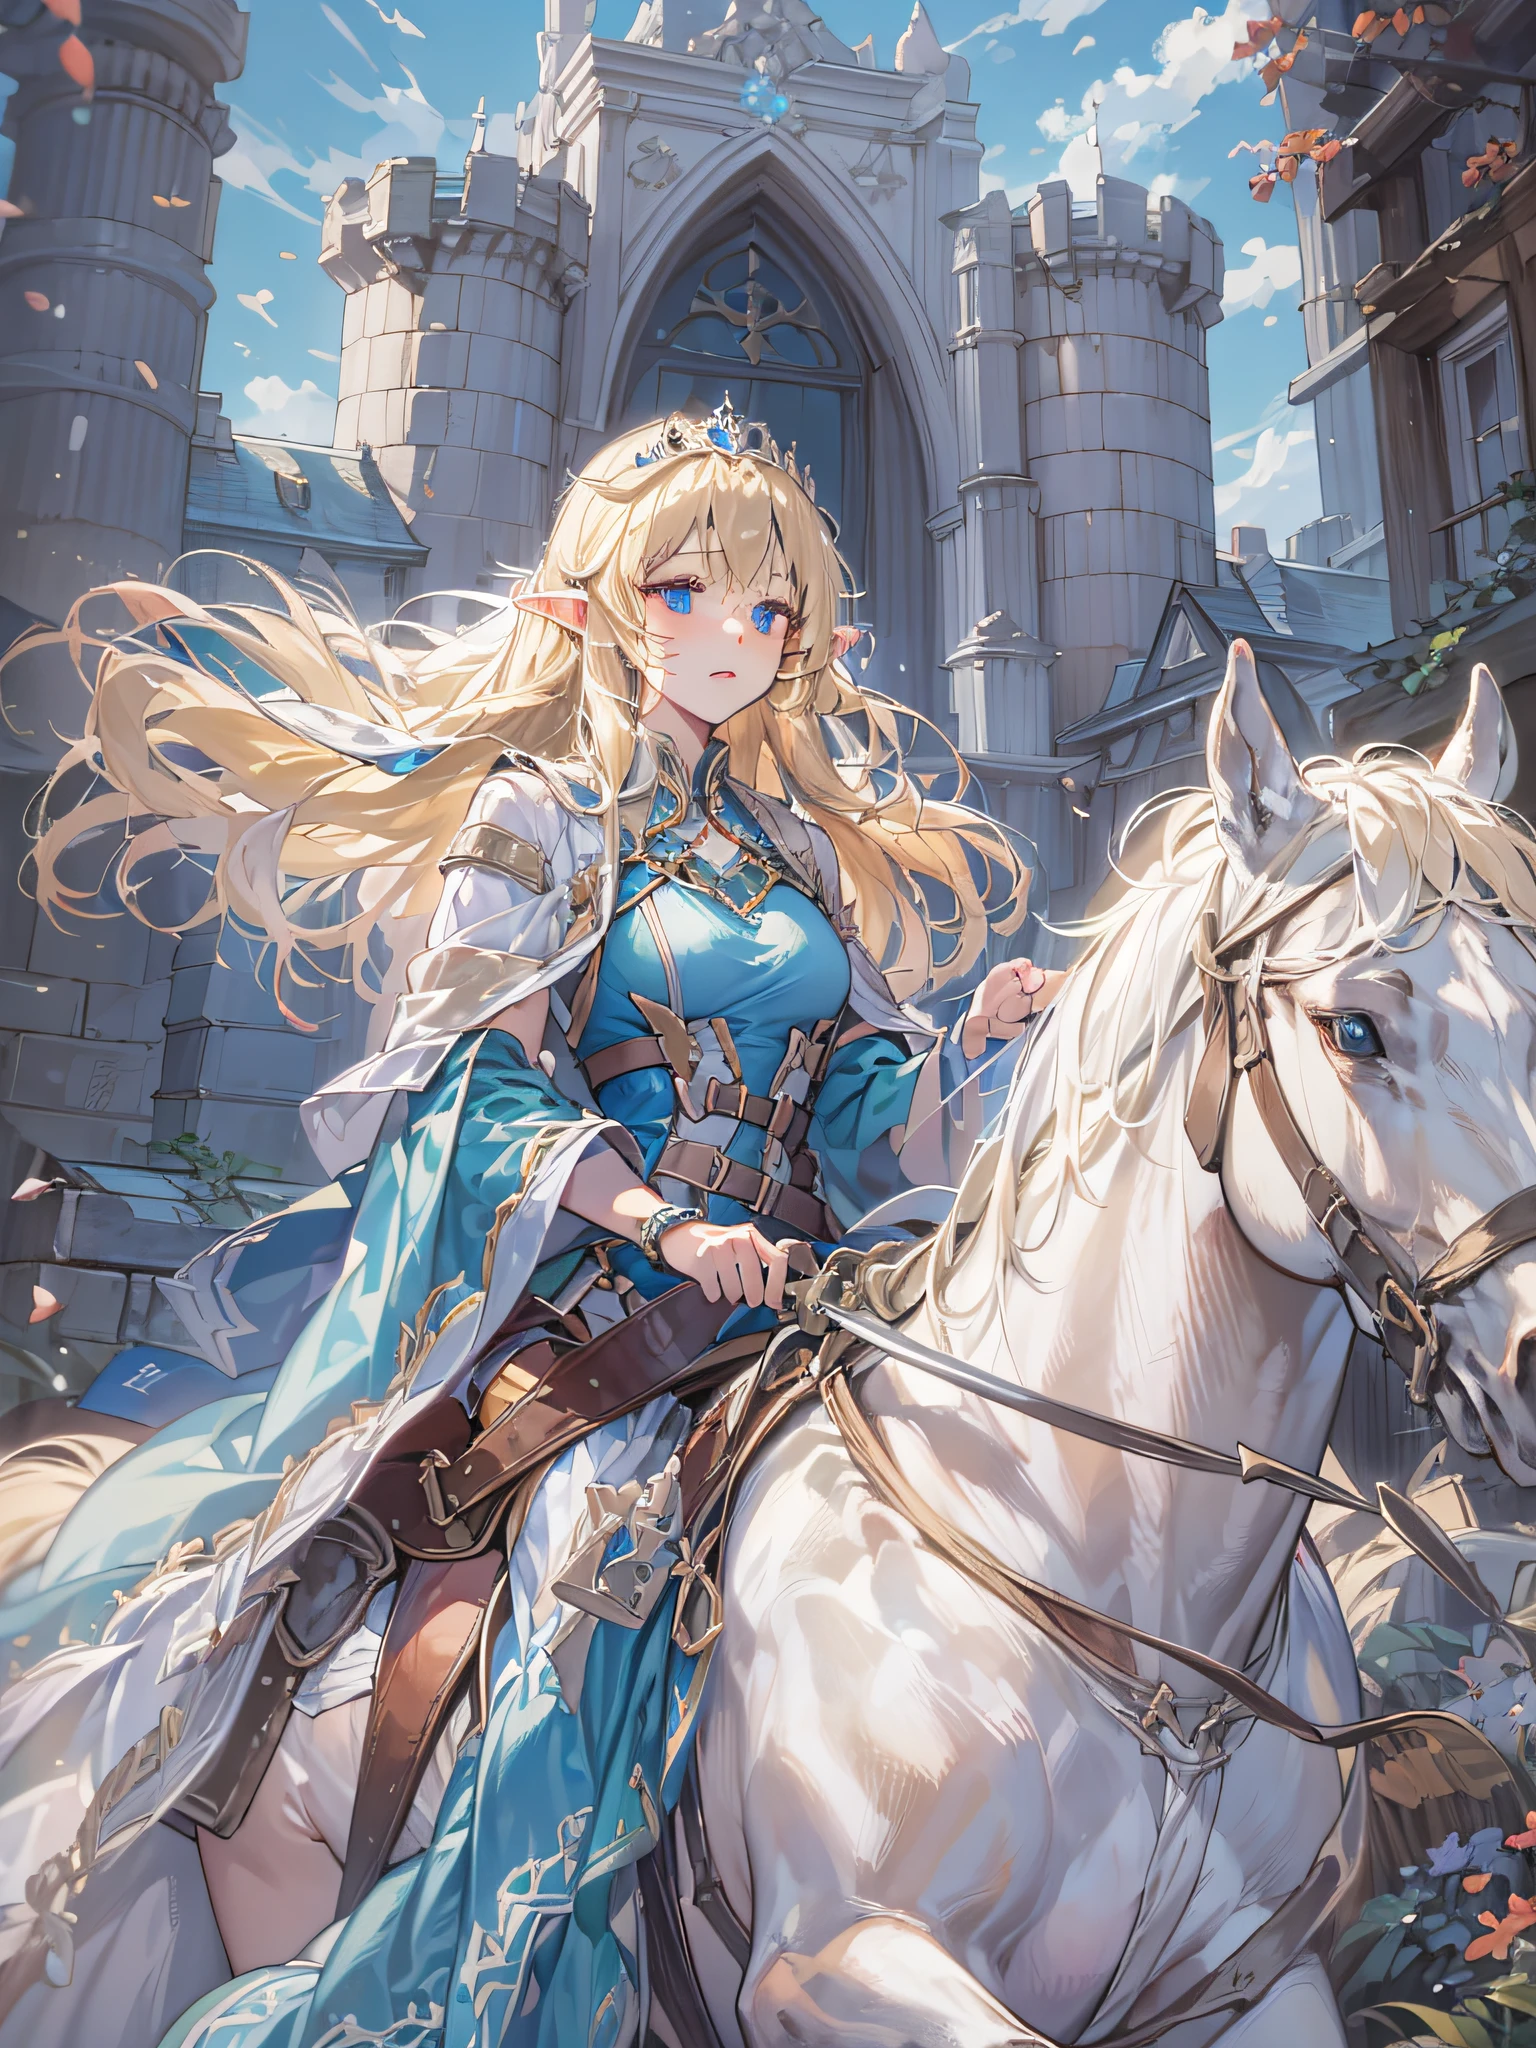 chica elfa, pelo largo rubio, blue eyes, Vestido azul, tiara de plata, tener una espada ceremonial, Montando un caballo blanco, frente a un castillo